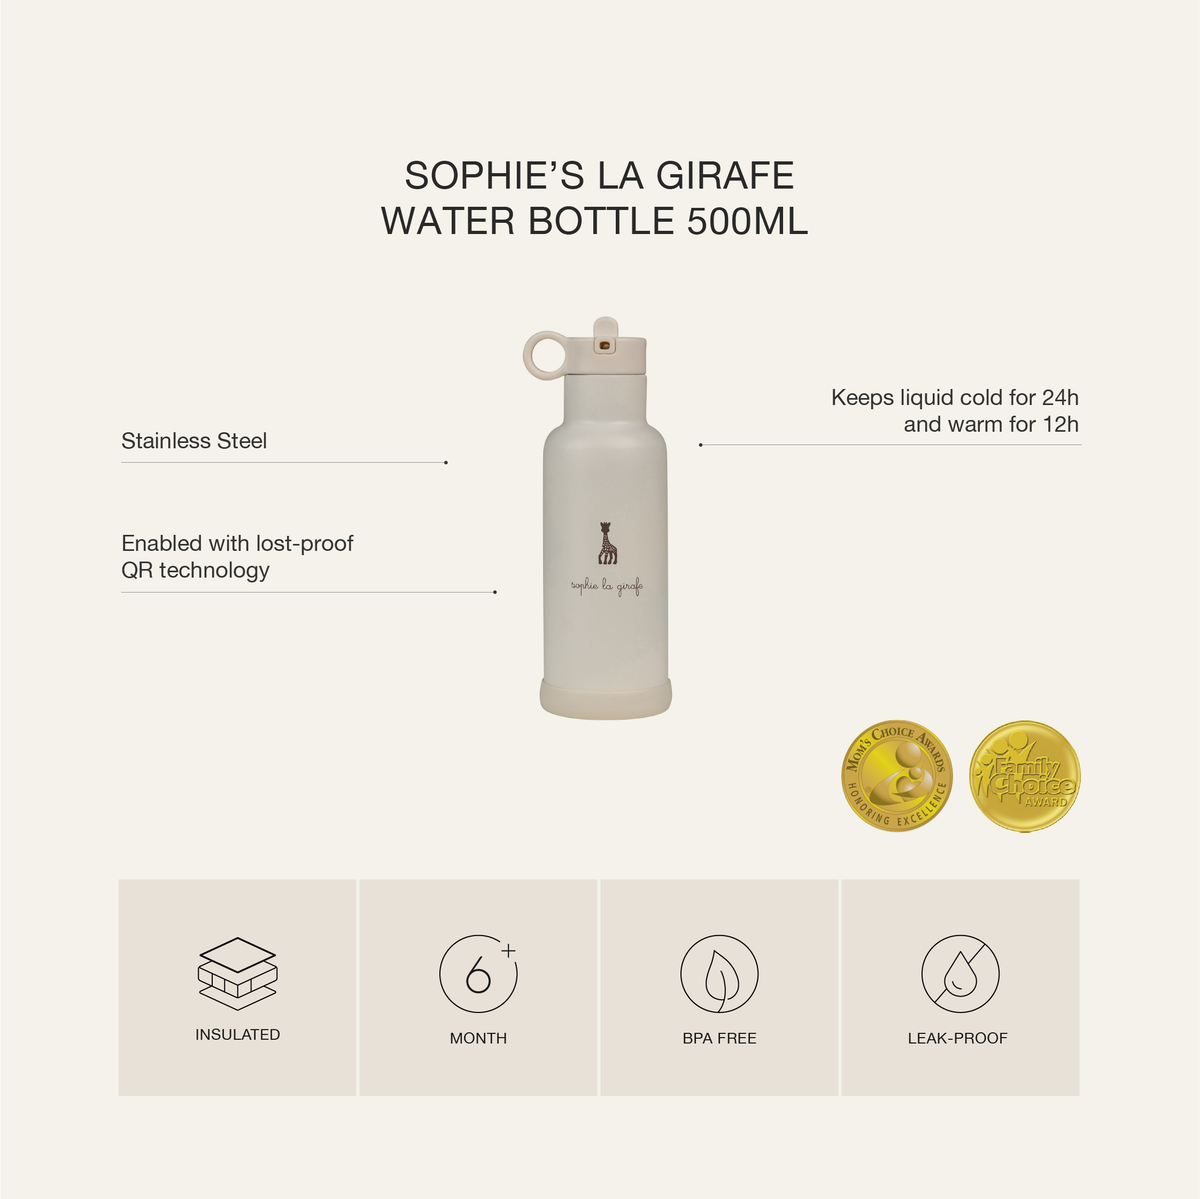 Citron Water bottle 500ml Sophie La Girafe